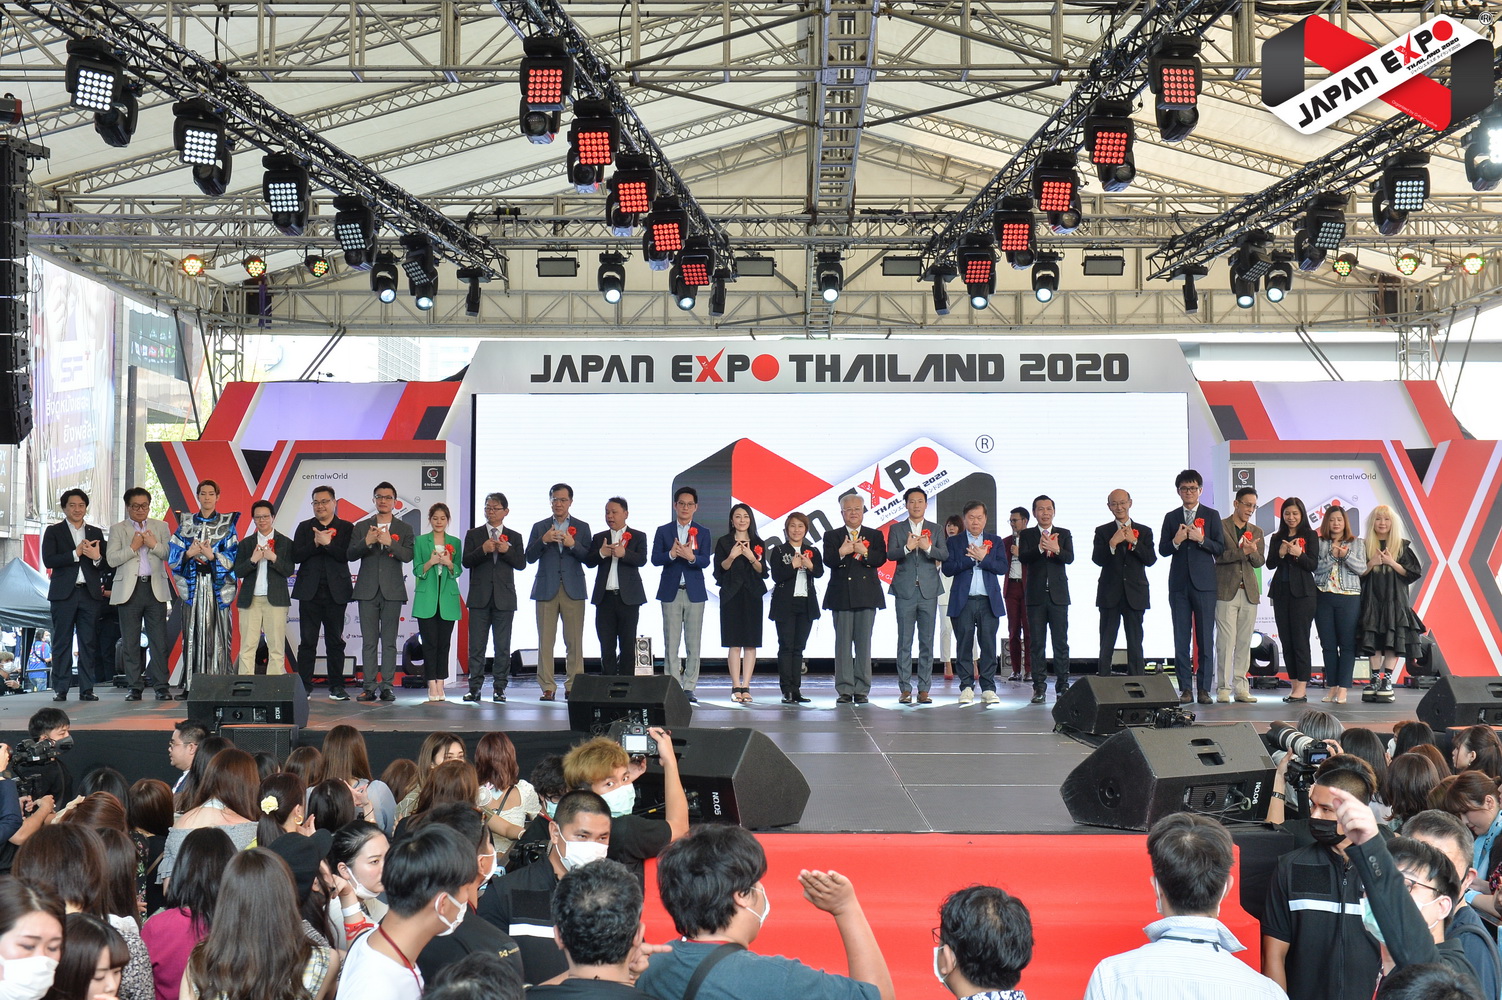 JAPAN EXPO THAILAND 2020